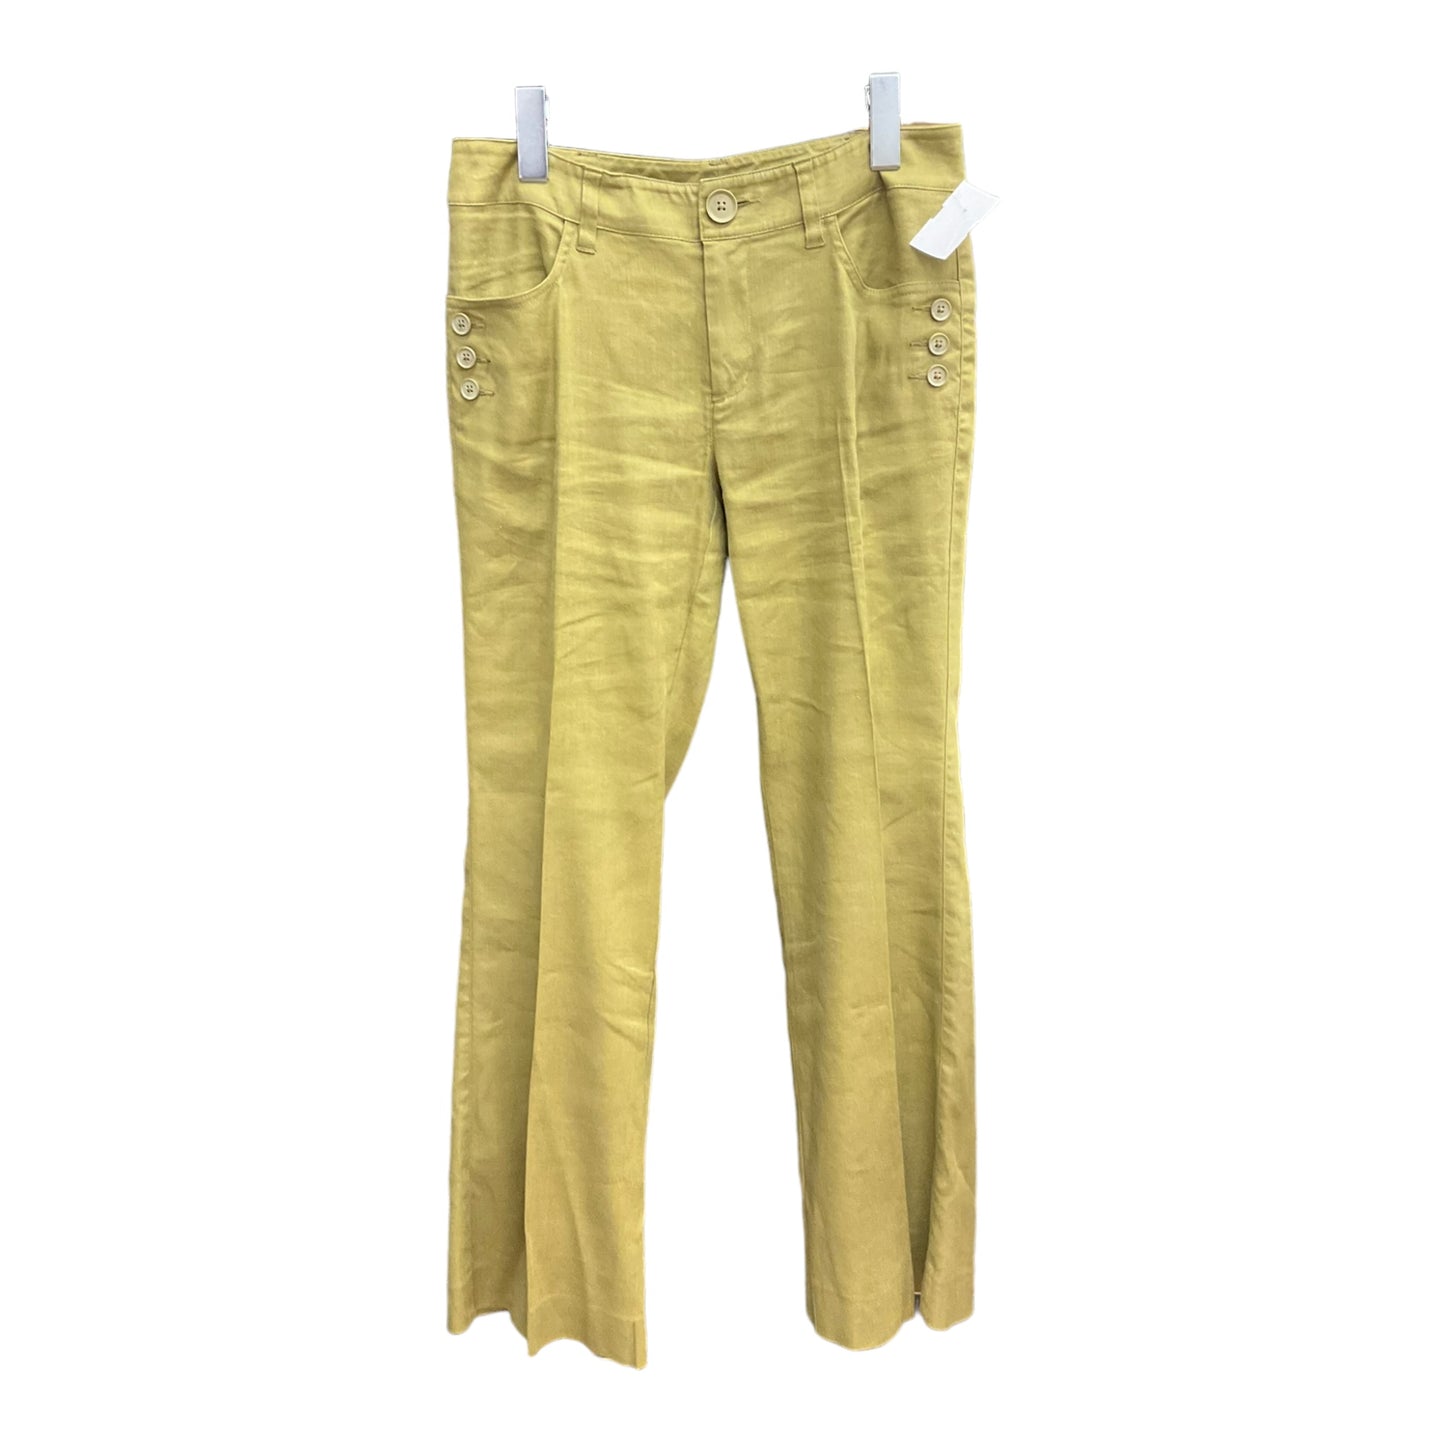 Pants Linen By Cabi  Size: 2